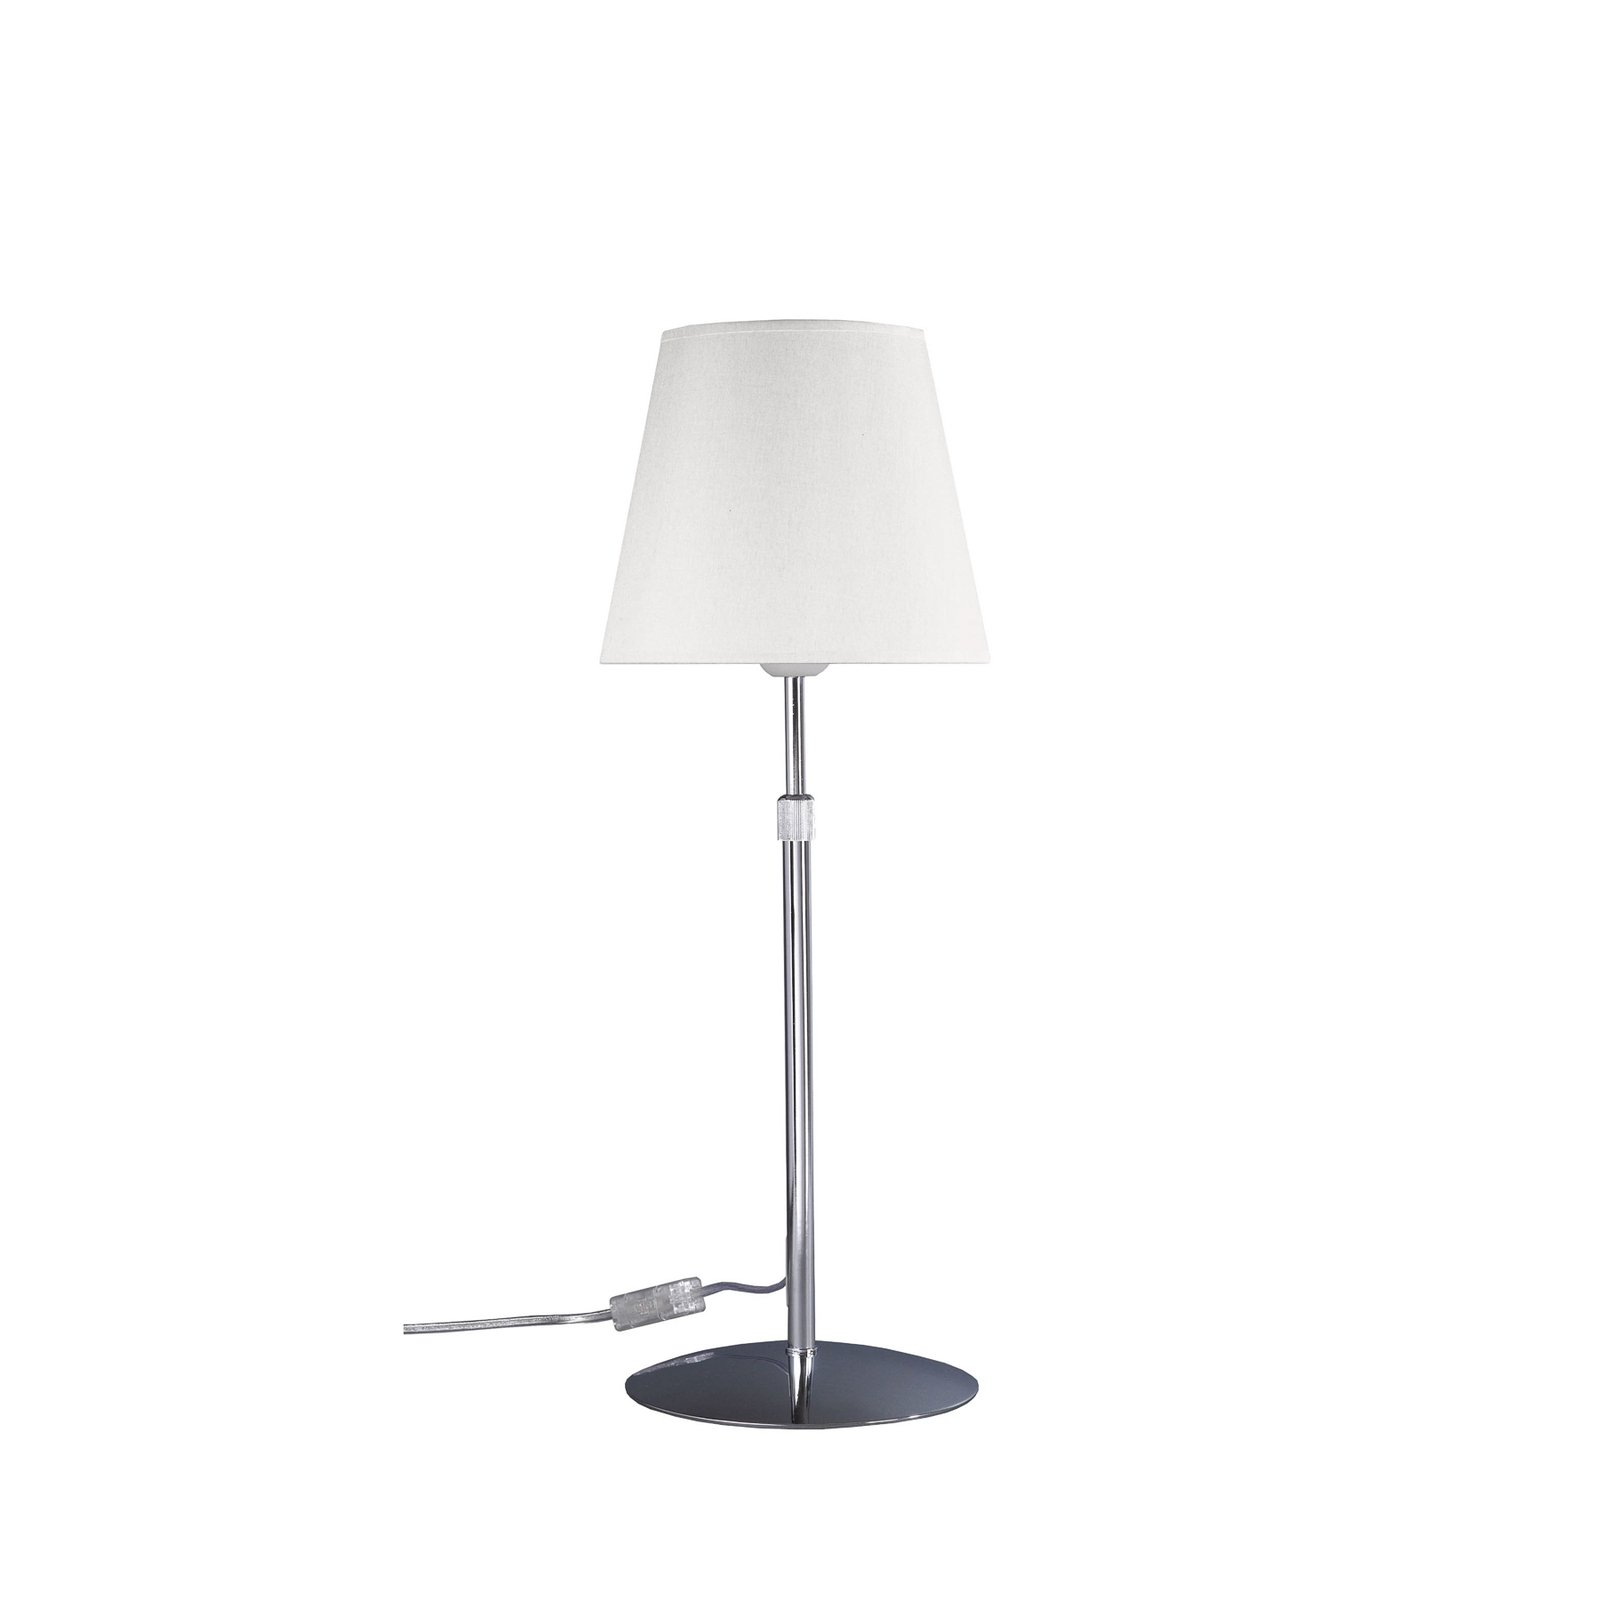 Aluminor Store asztali lámpa, króm/fehér